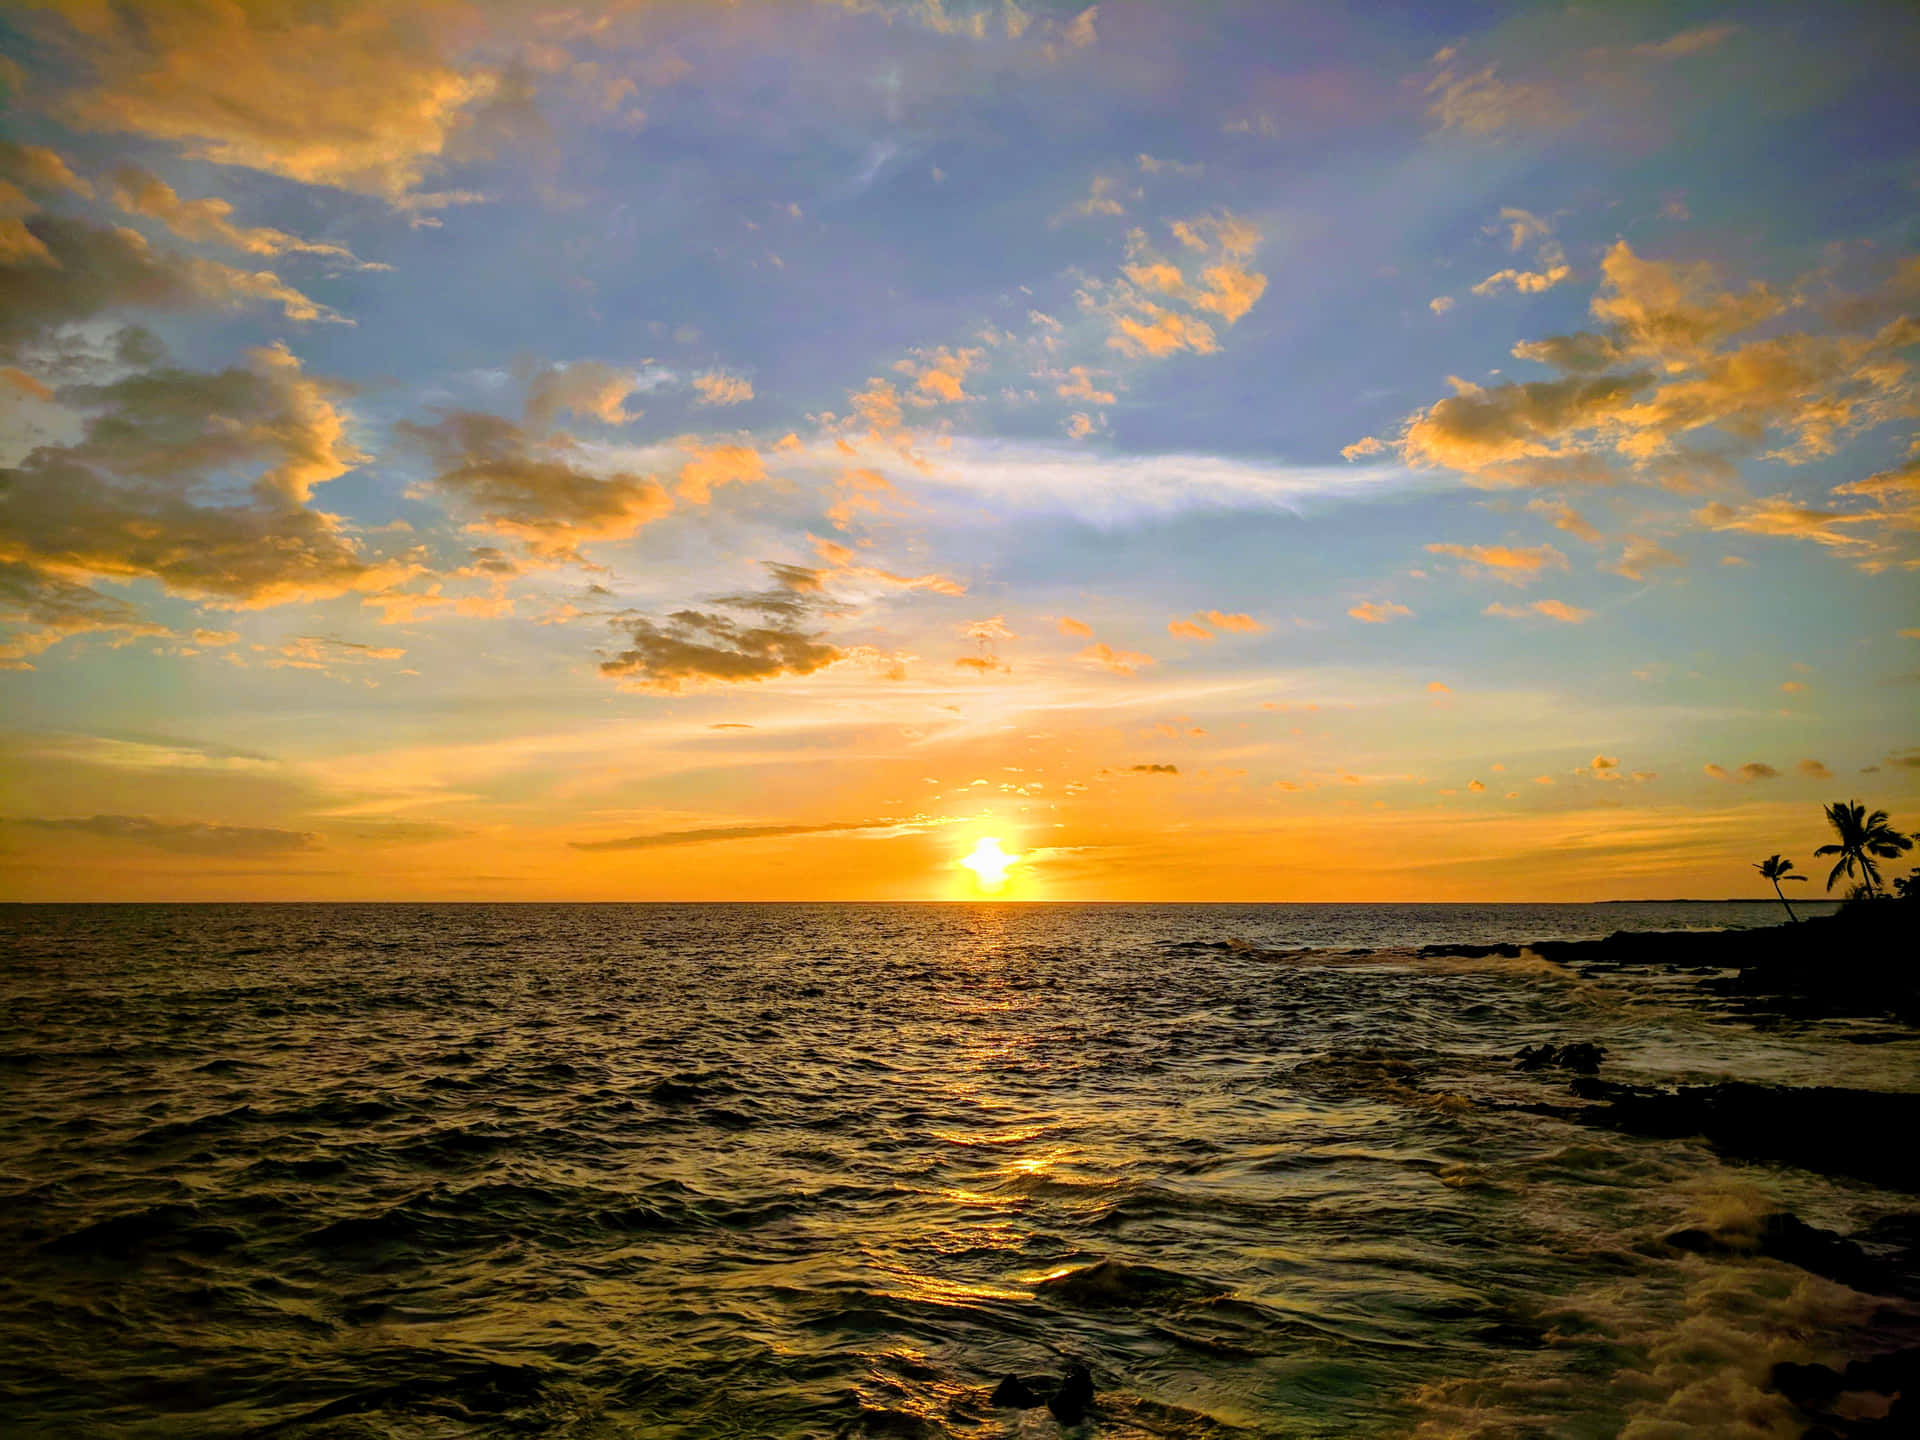 Hawaiischersonnenuntergang Im Ozean Bilder